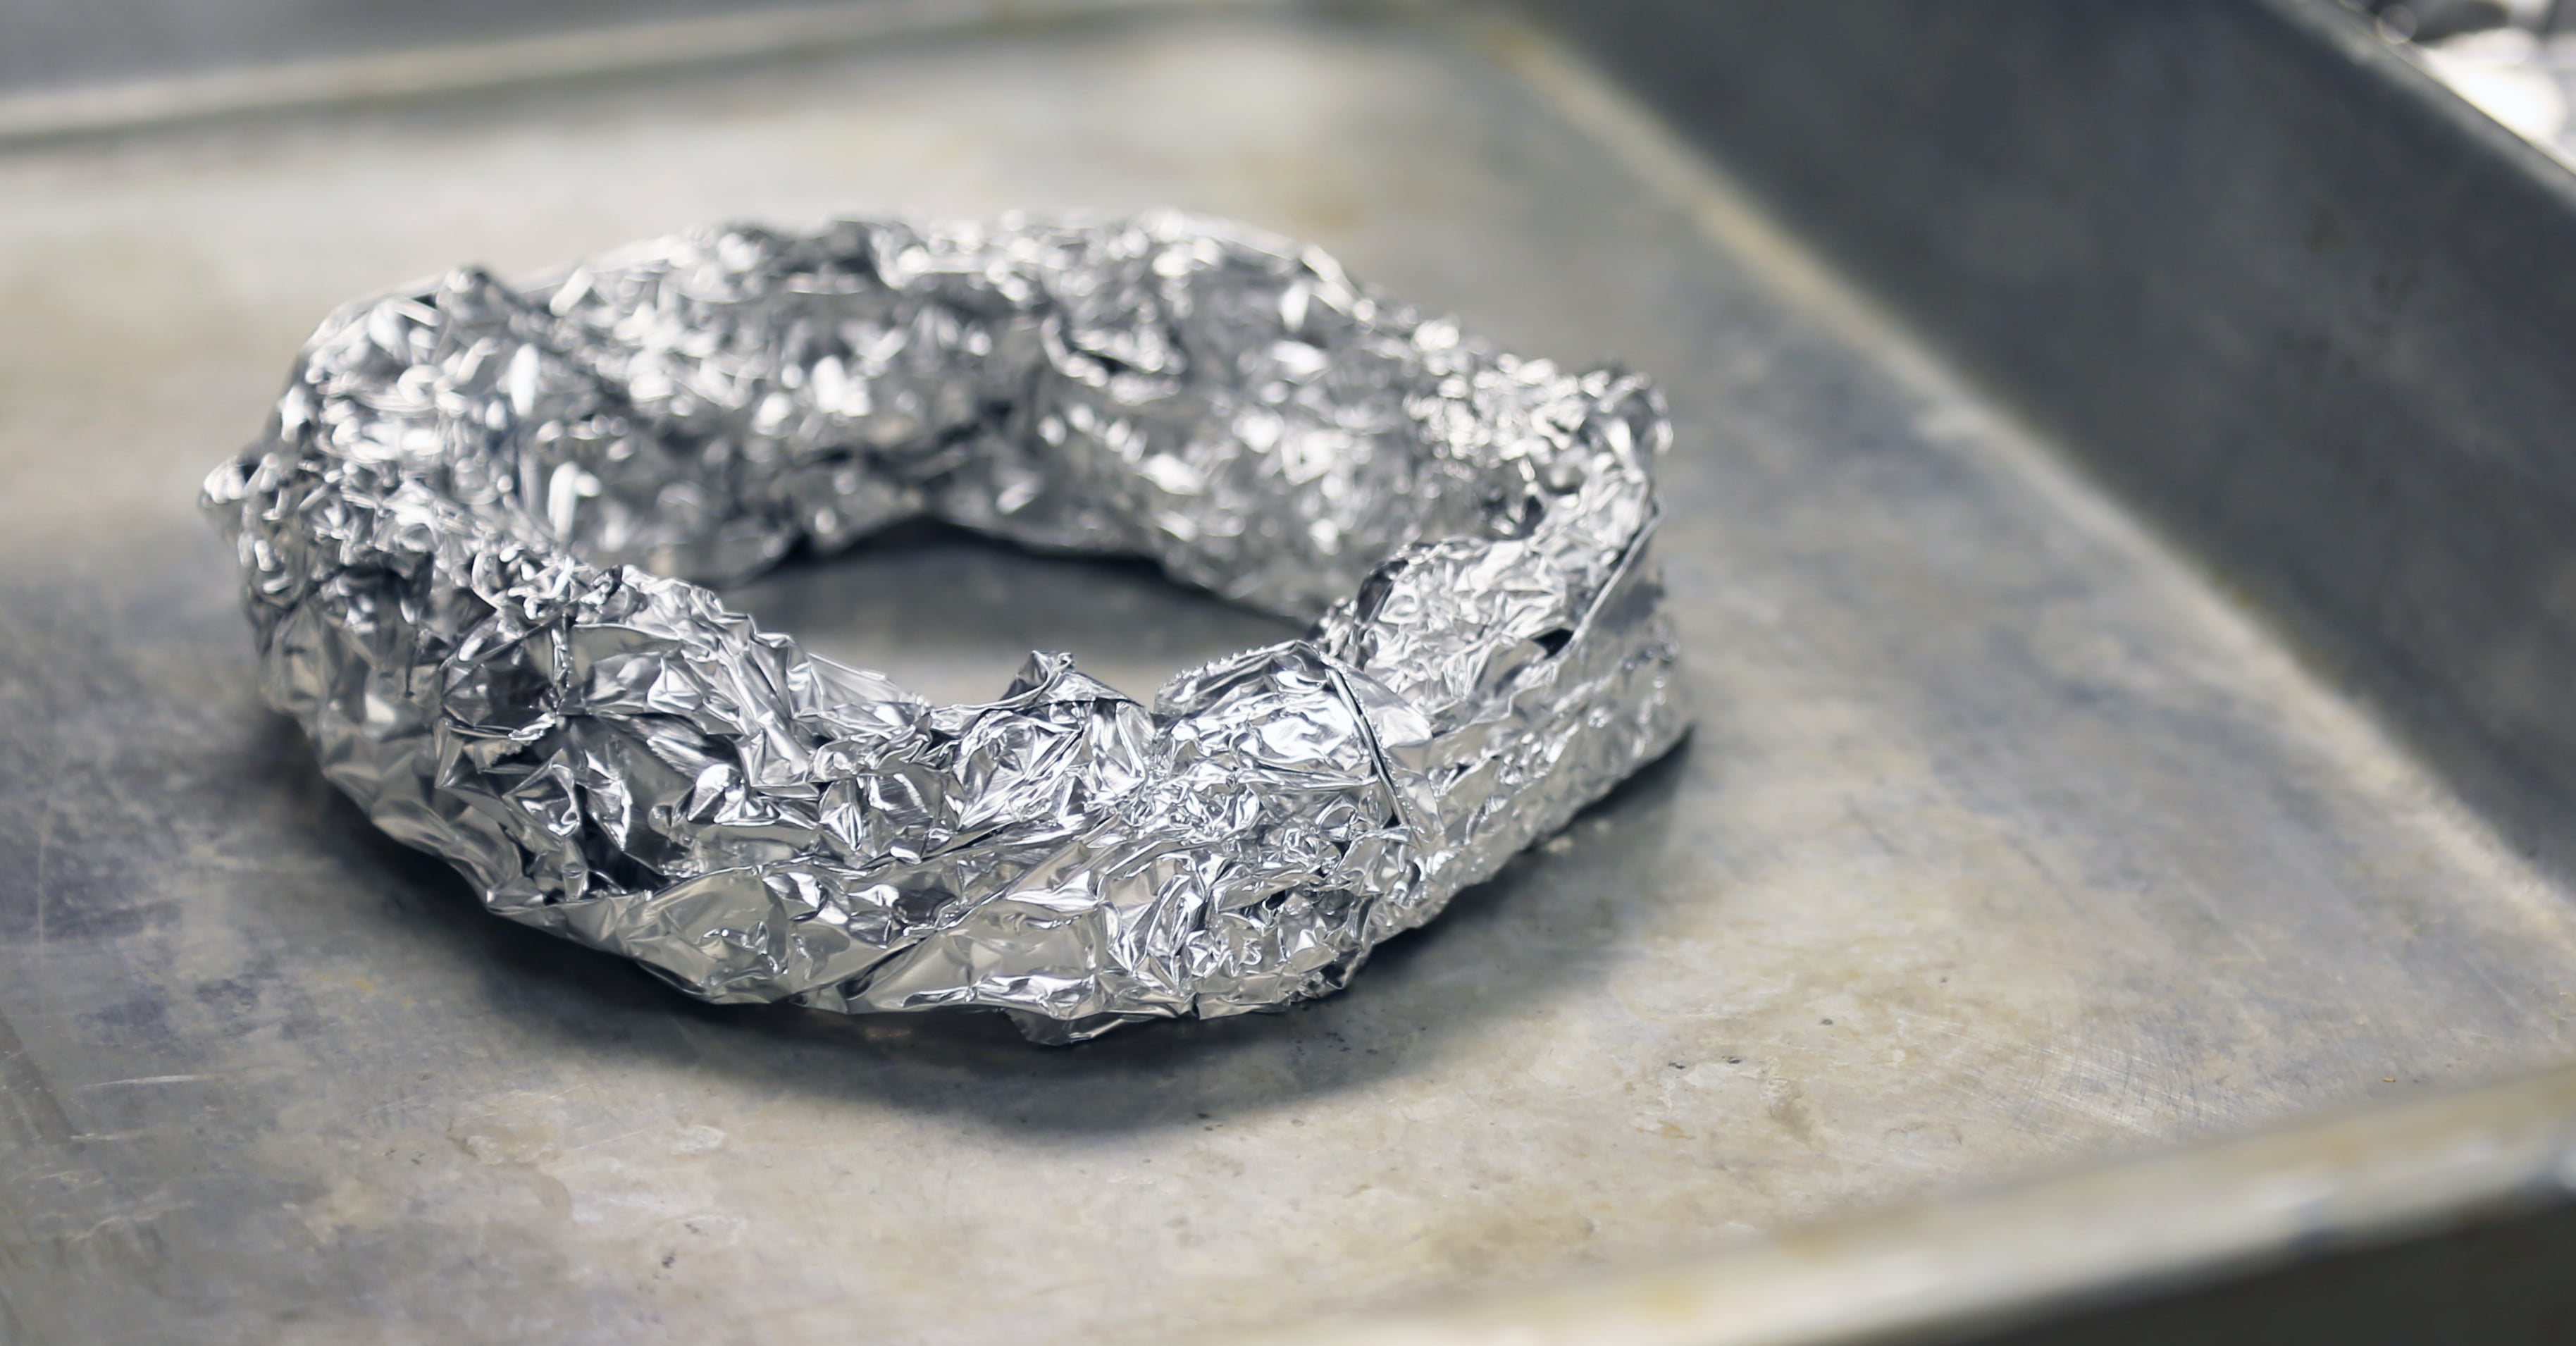 10 Effective Aluminium Foil Hacks